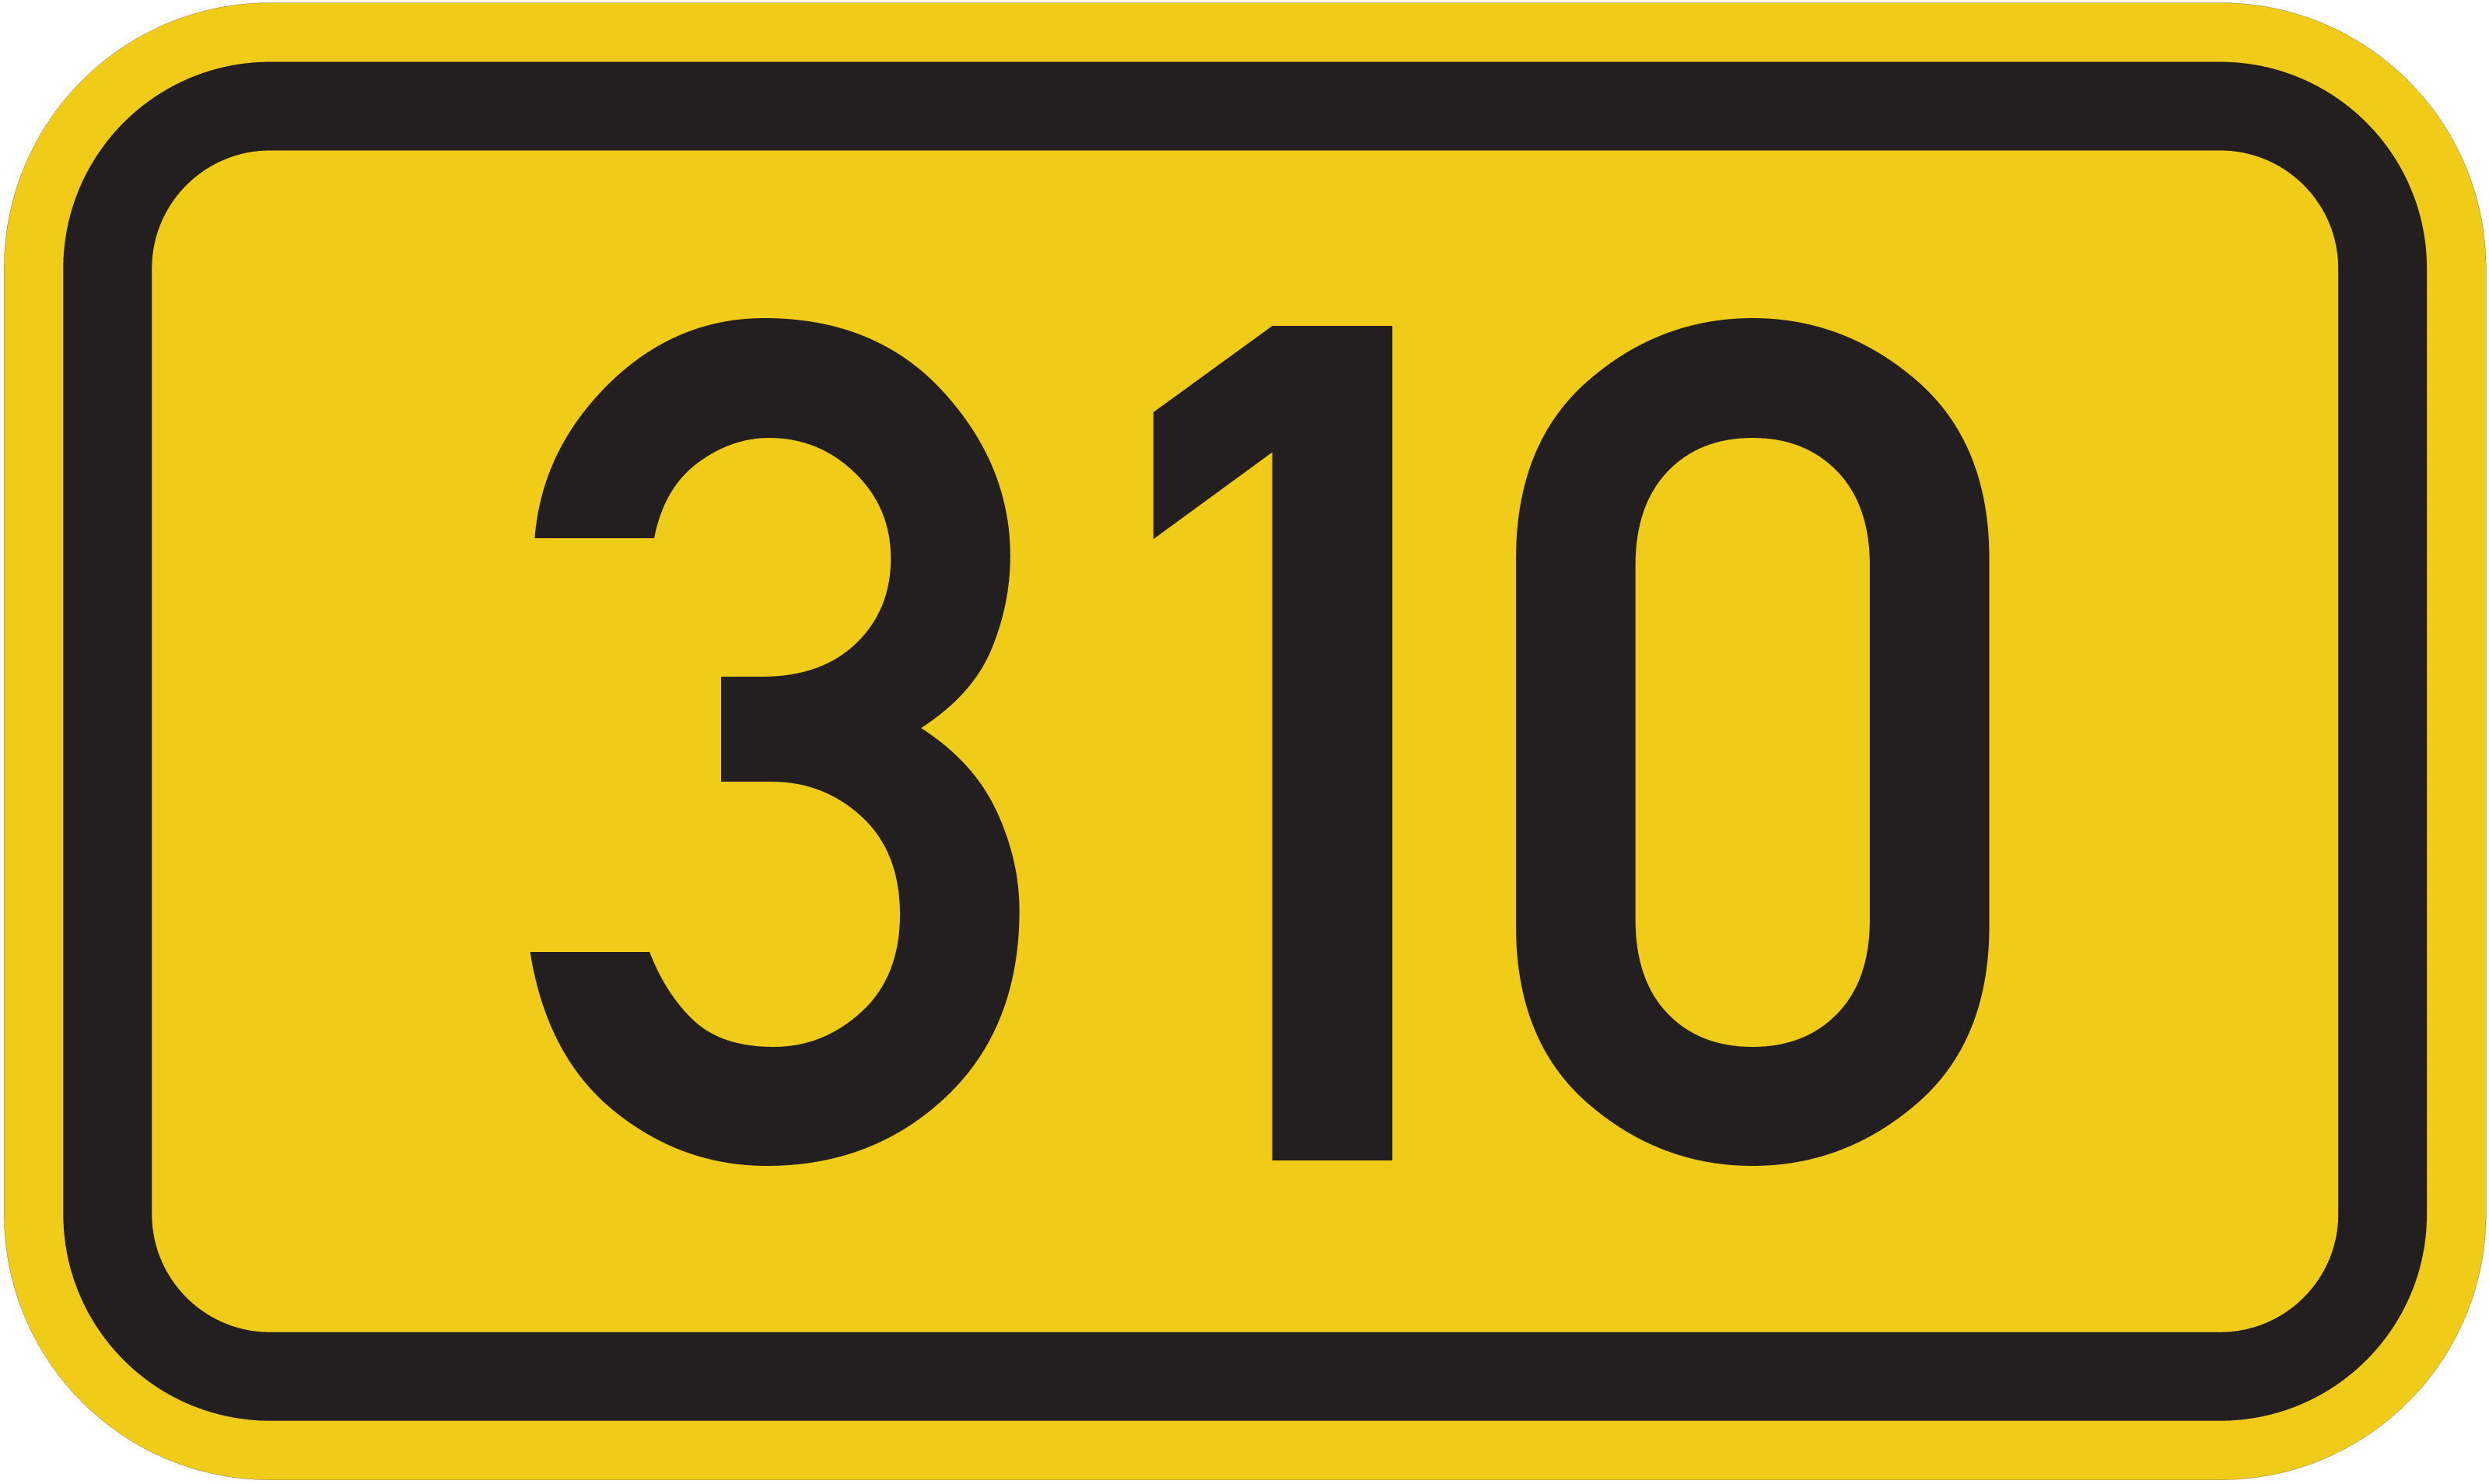 Straßenschild Bundesstraße 310